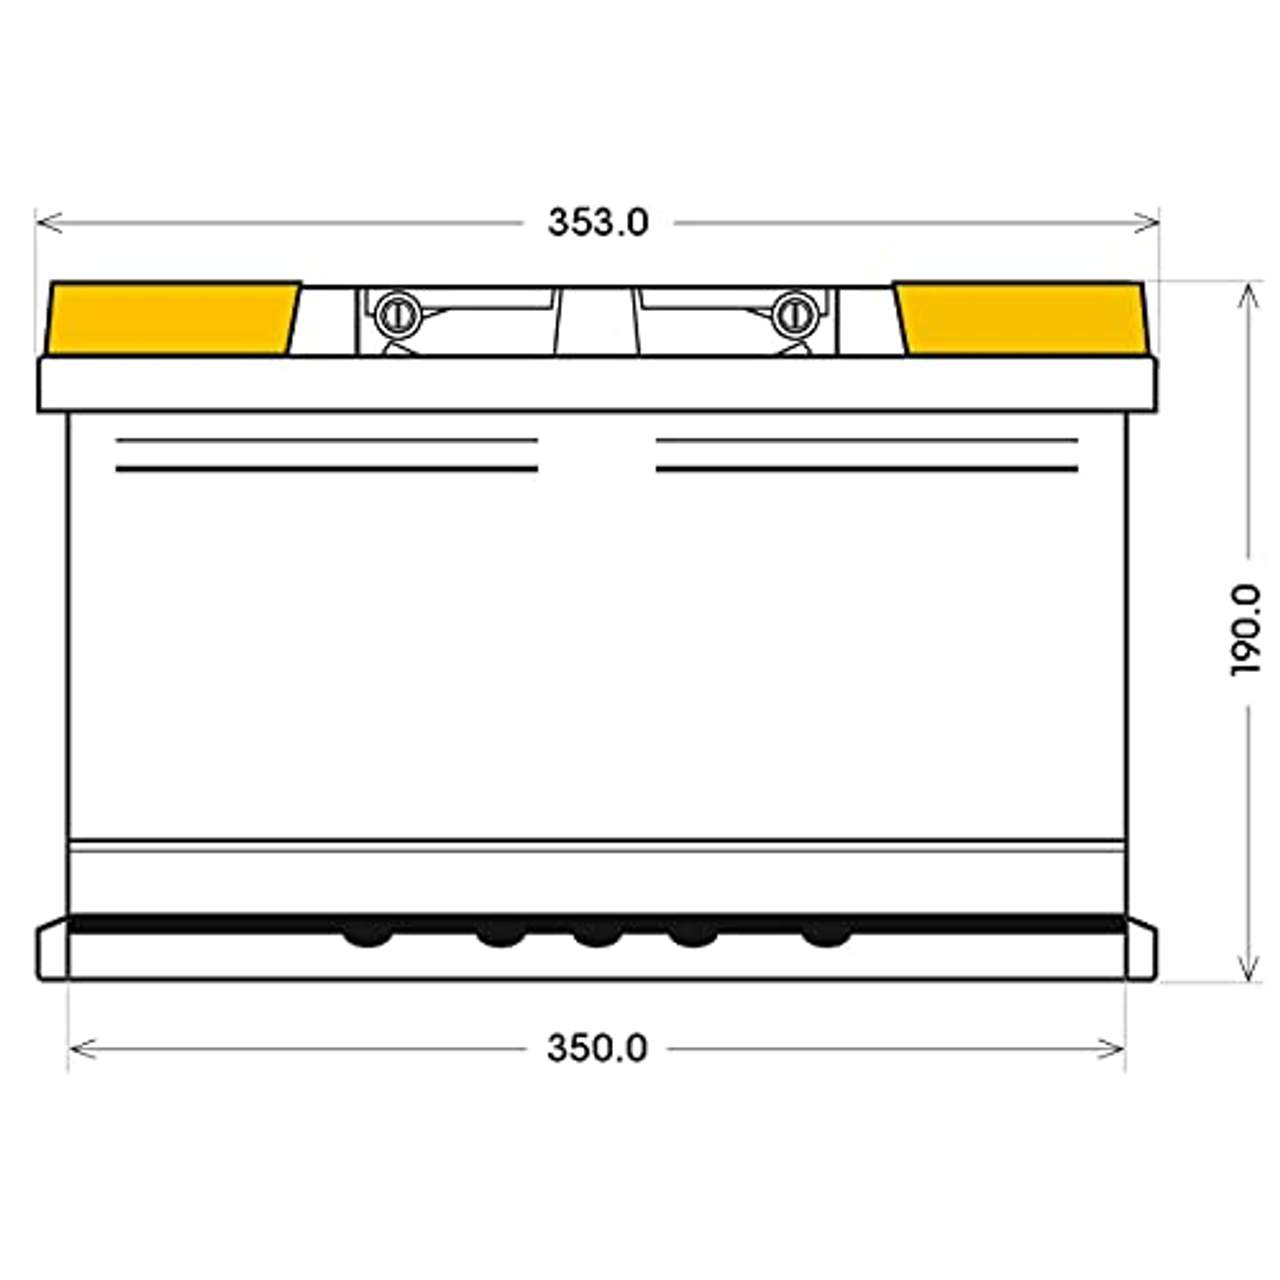 Solarbatterie 12V 120Ah Adler Wohnmobil Verbraucher Boot Wohnwagen